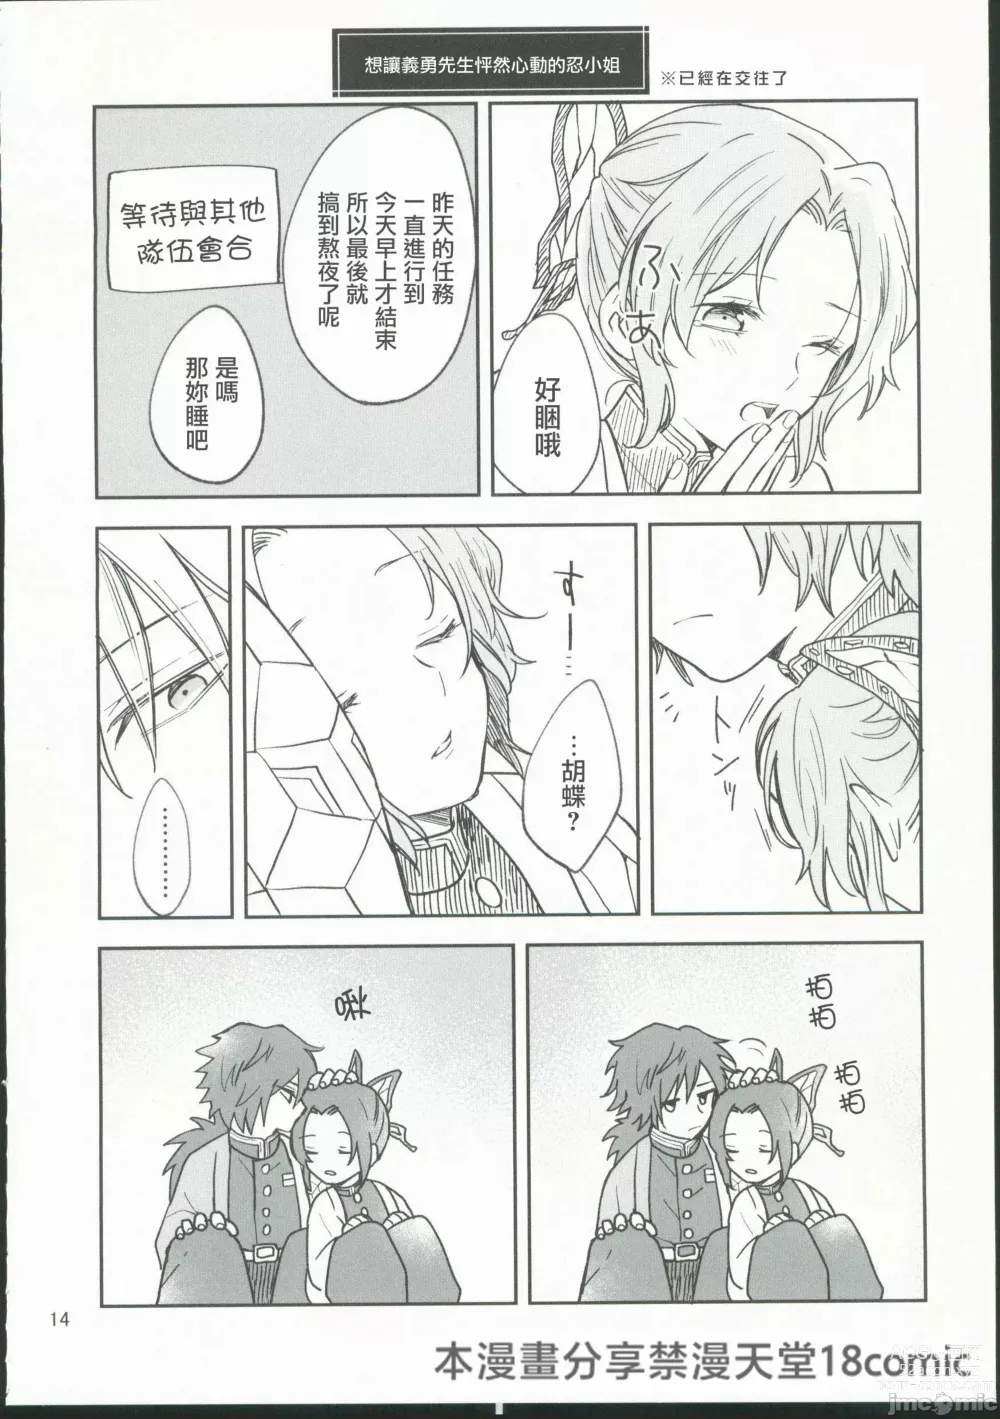 Page 13 of doujinshi Koi Tsumugi